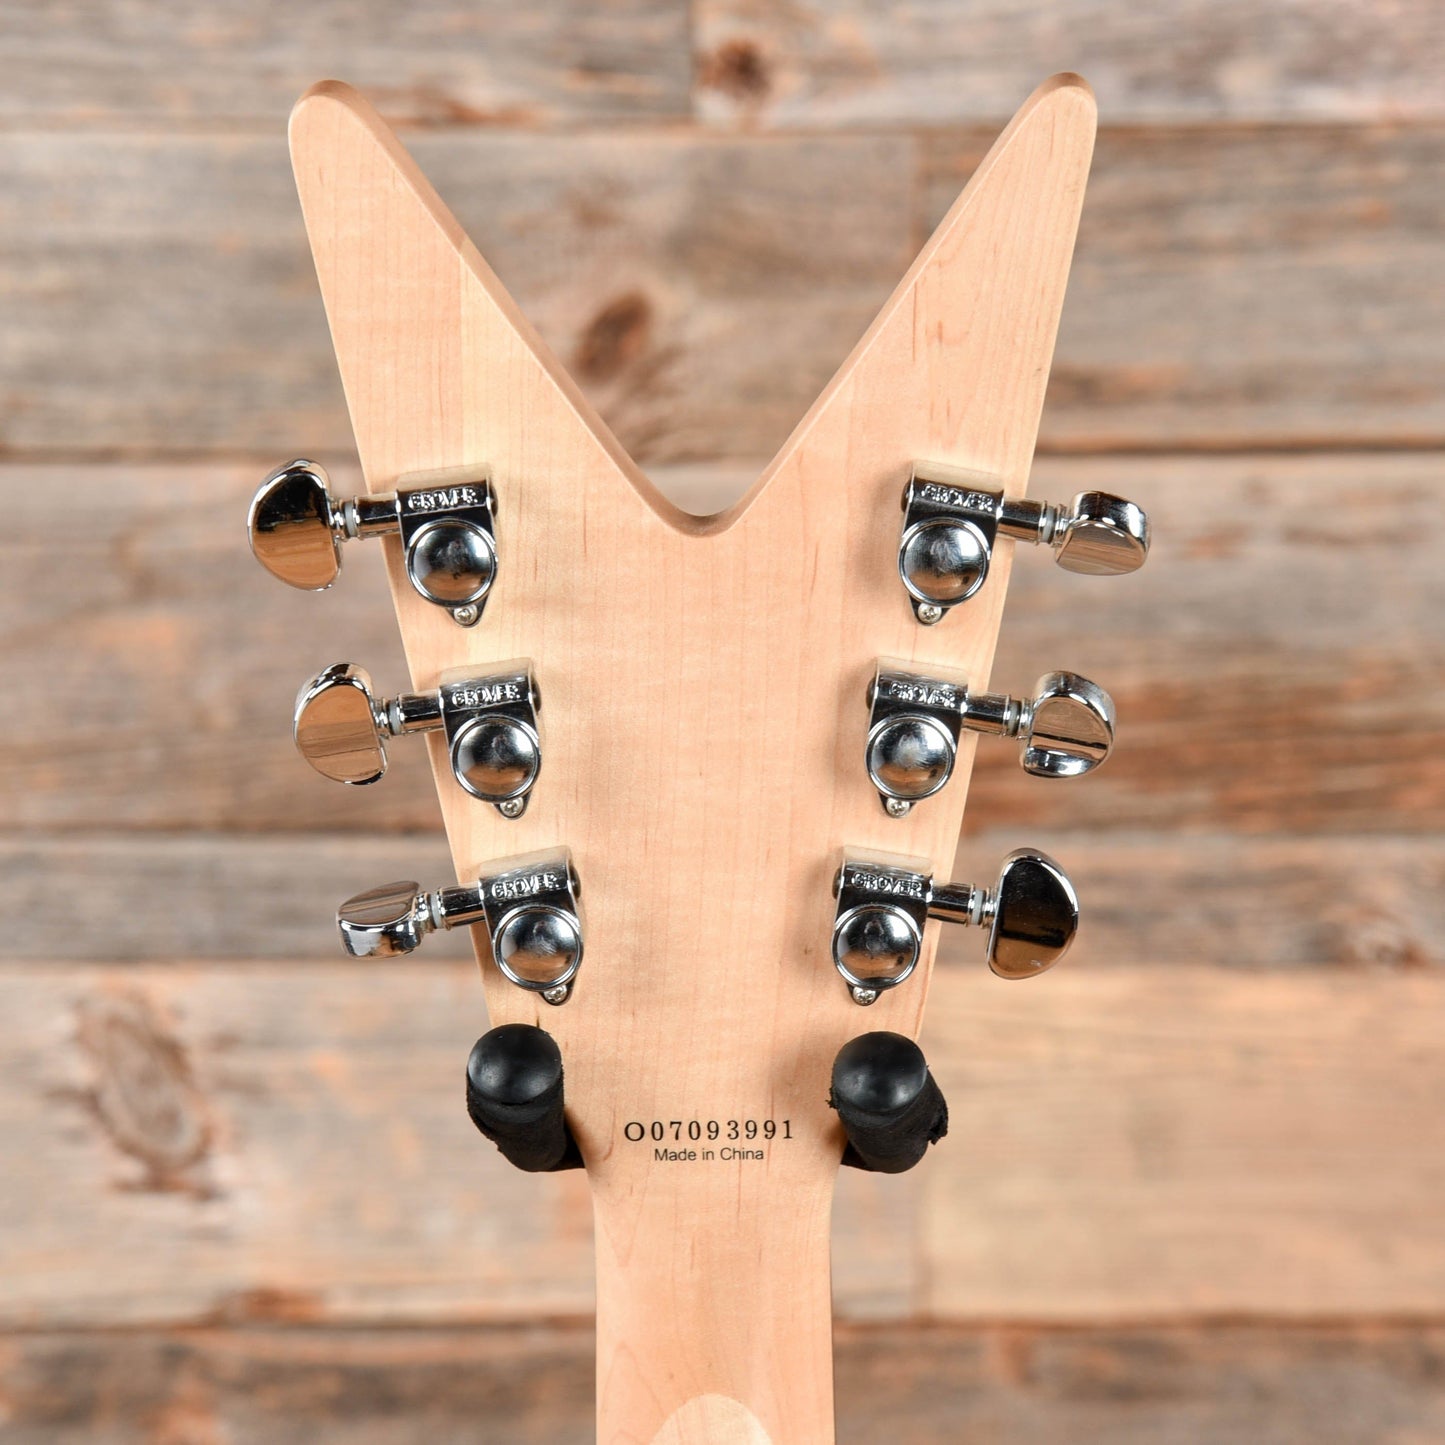 Dean Guitars V-X Black Electric Guitars / Solid Body